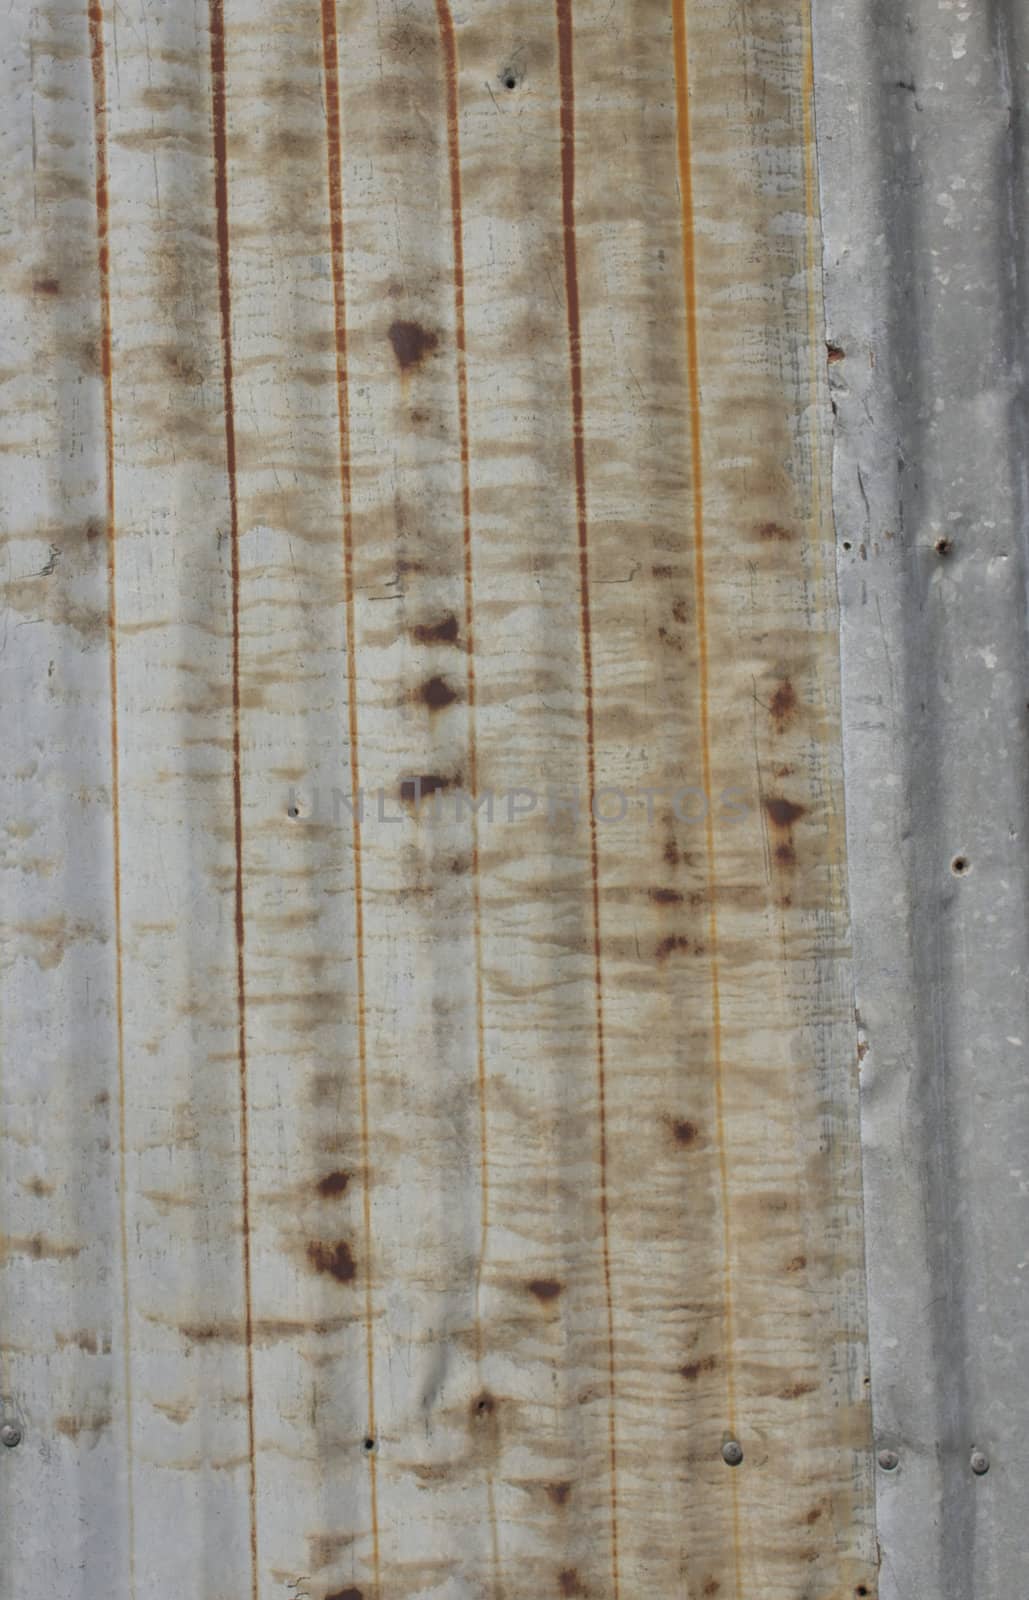 A rusty corrugated iron metal fence close up/ Zinc wall